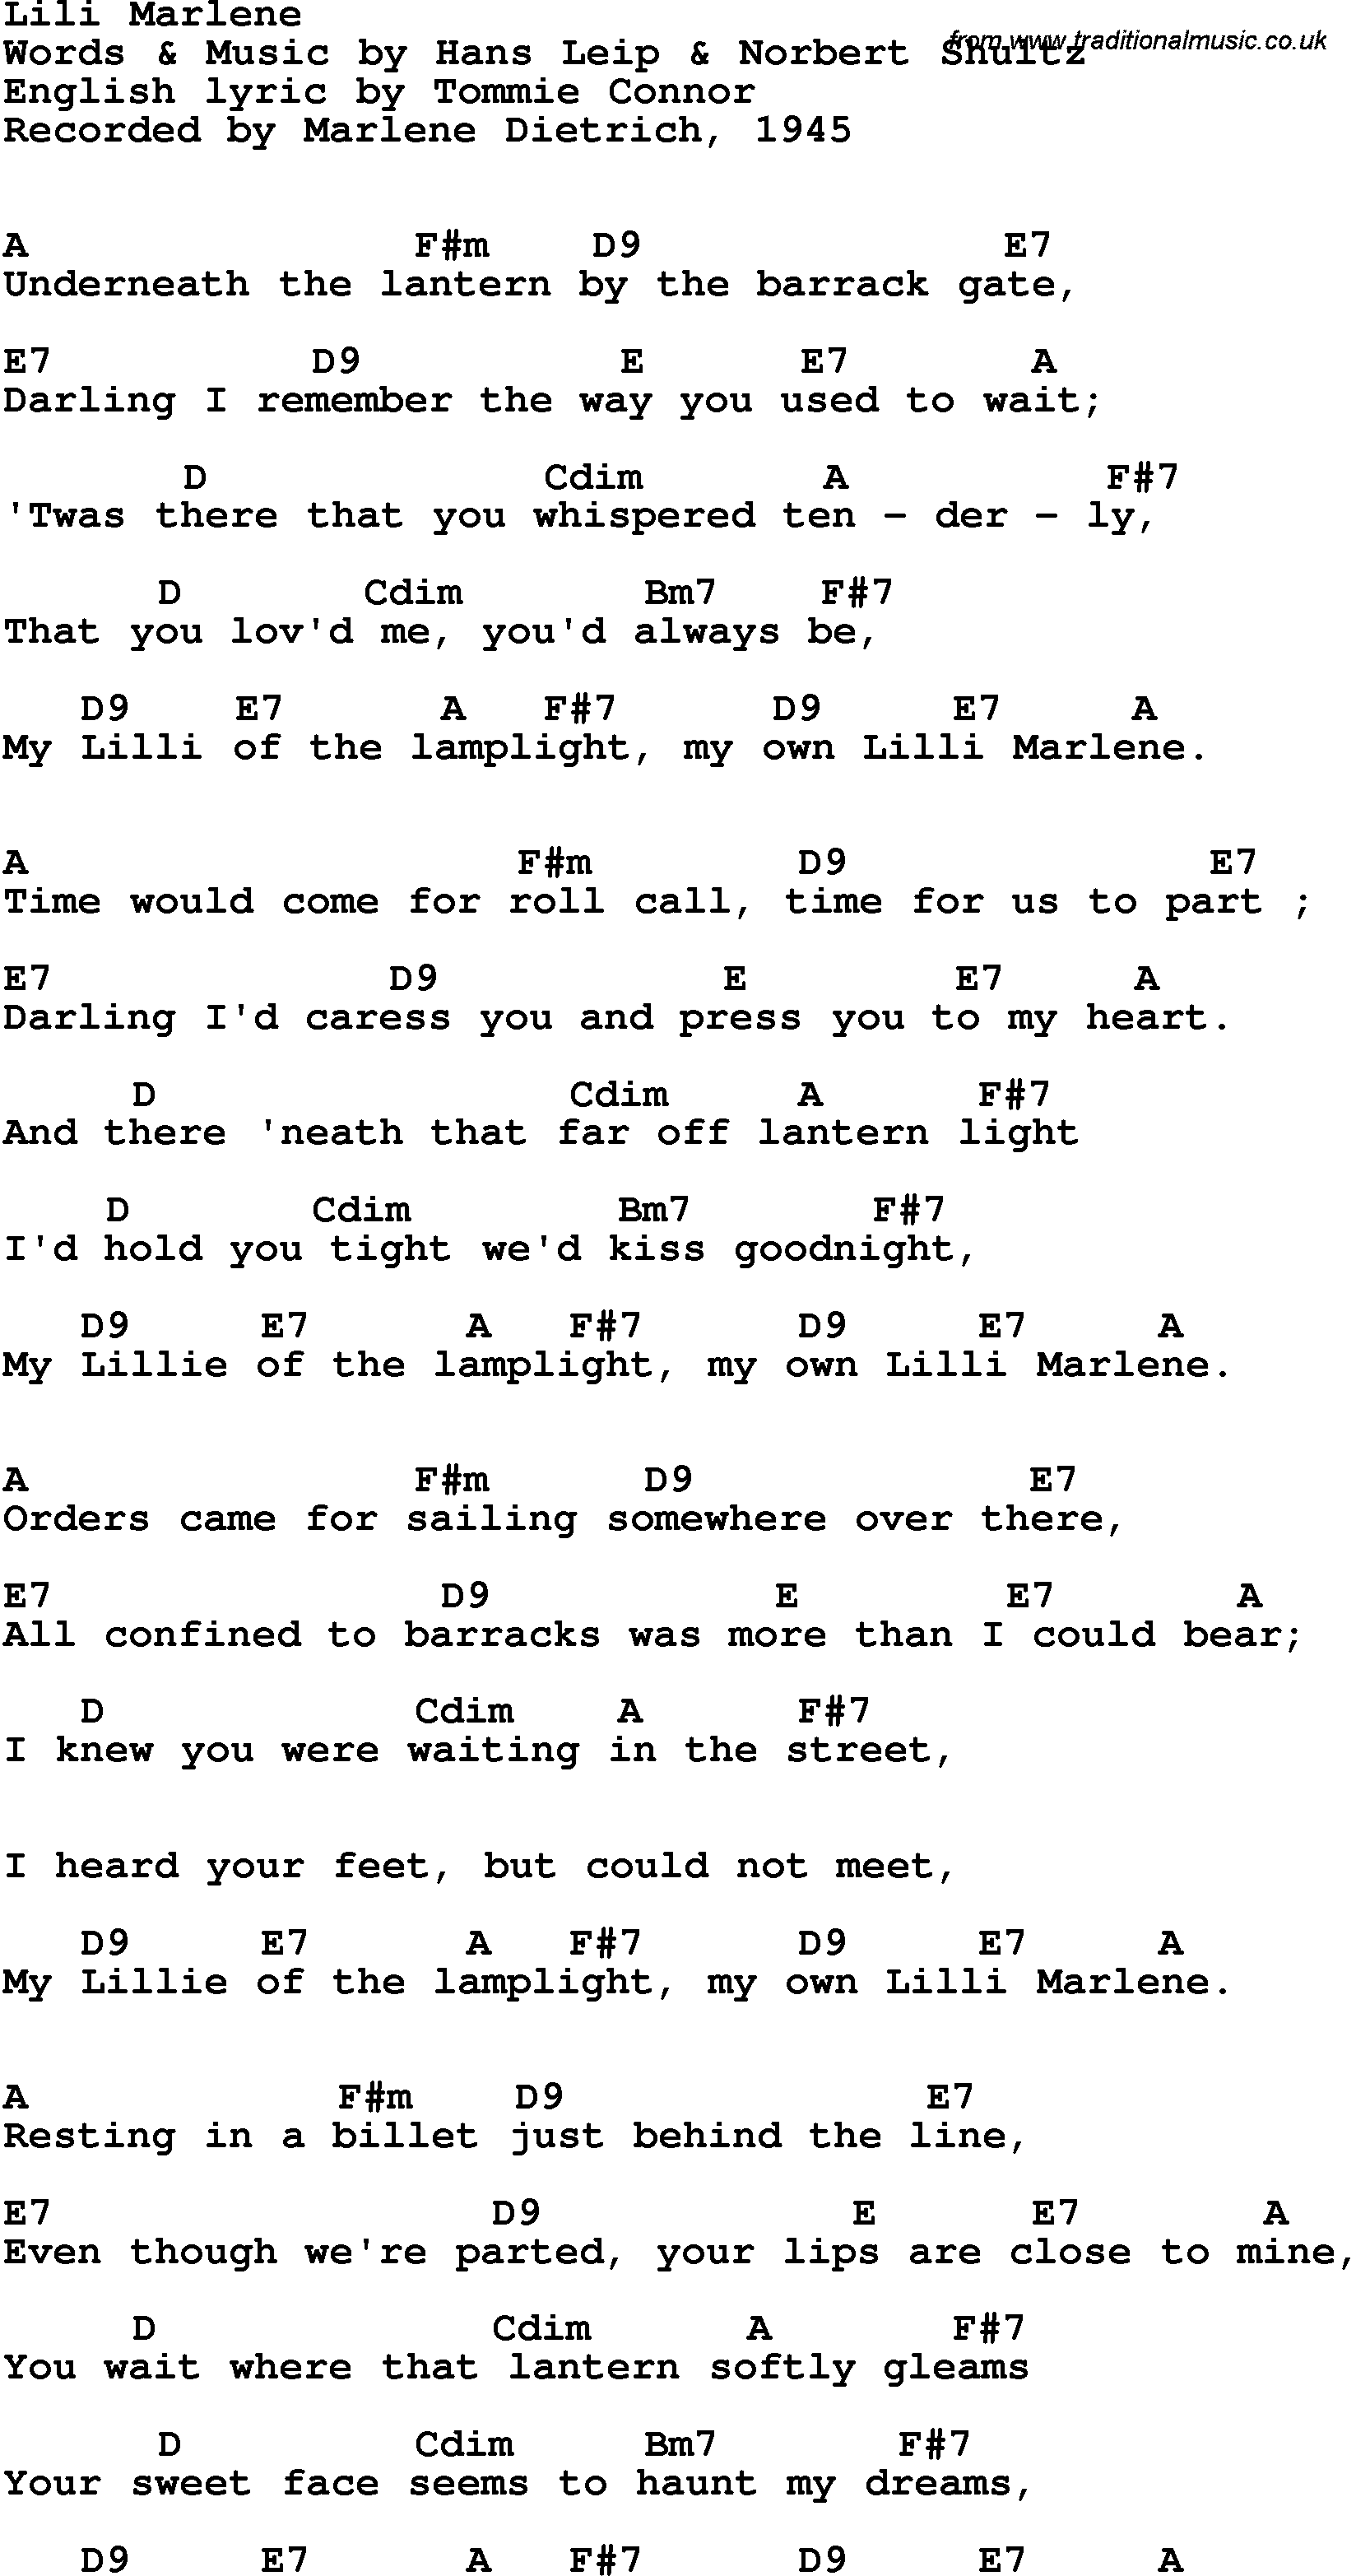 Song Lyrics with guitar chords for Lili Marlene - Marlene Dietrich, 1945